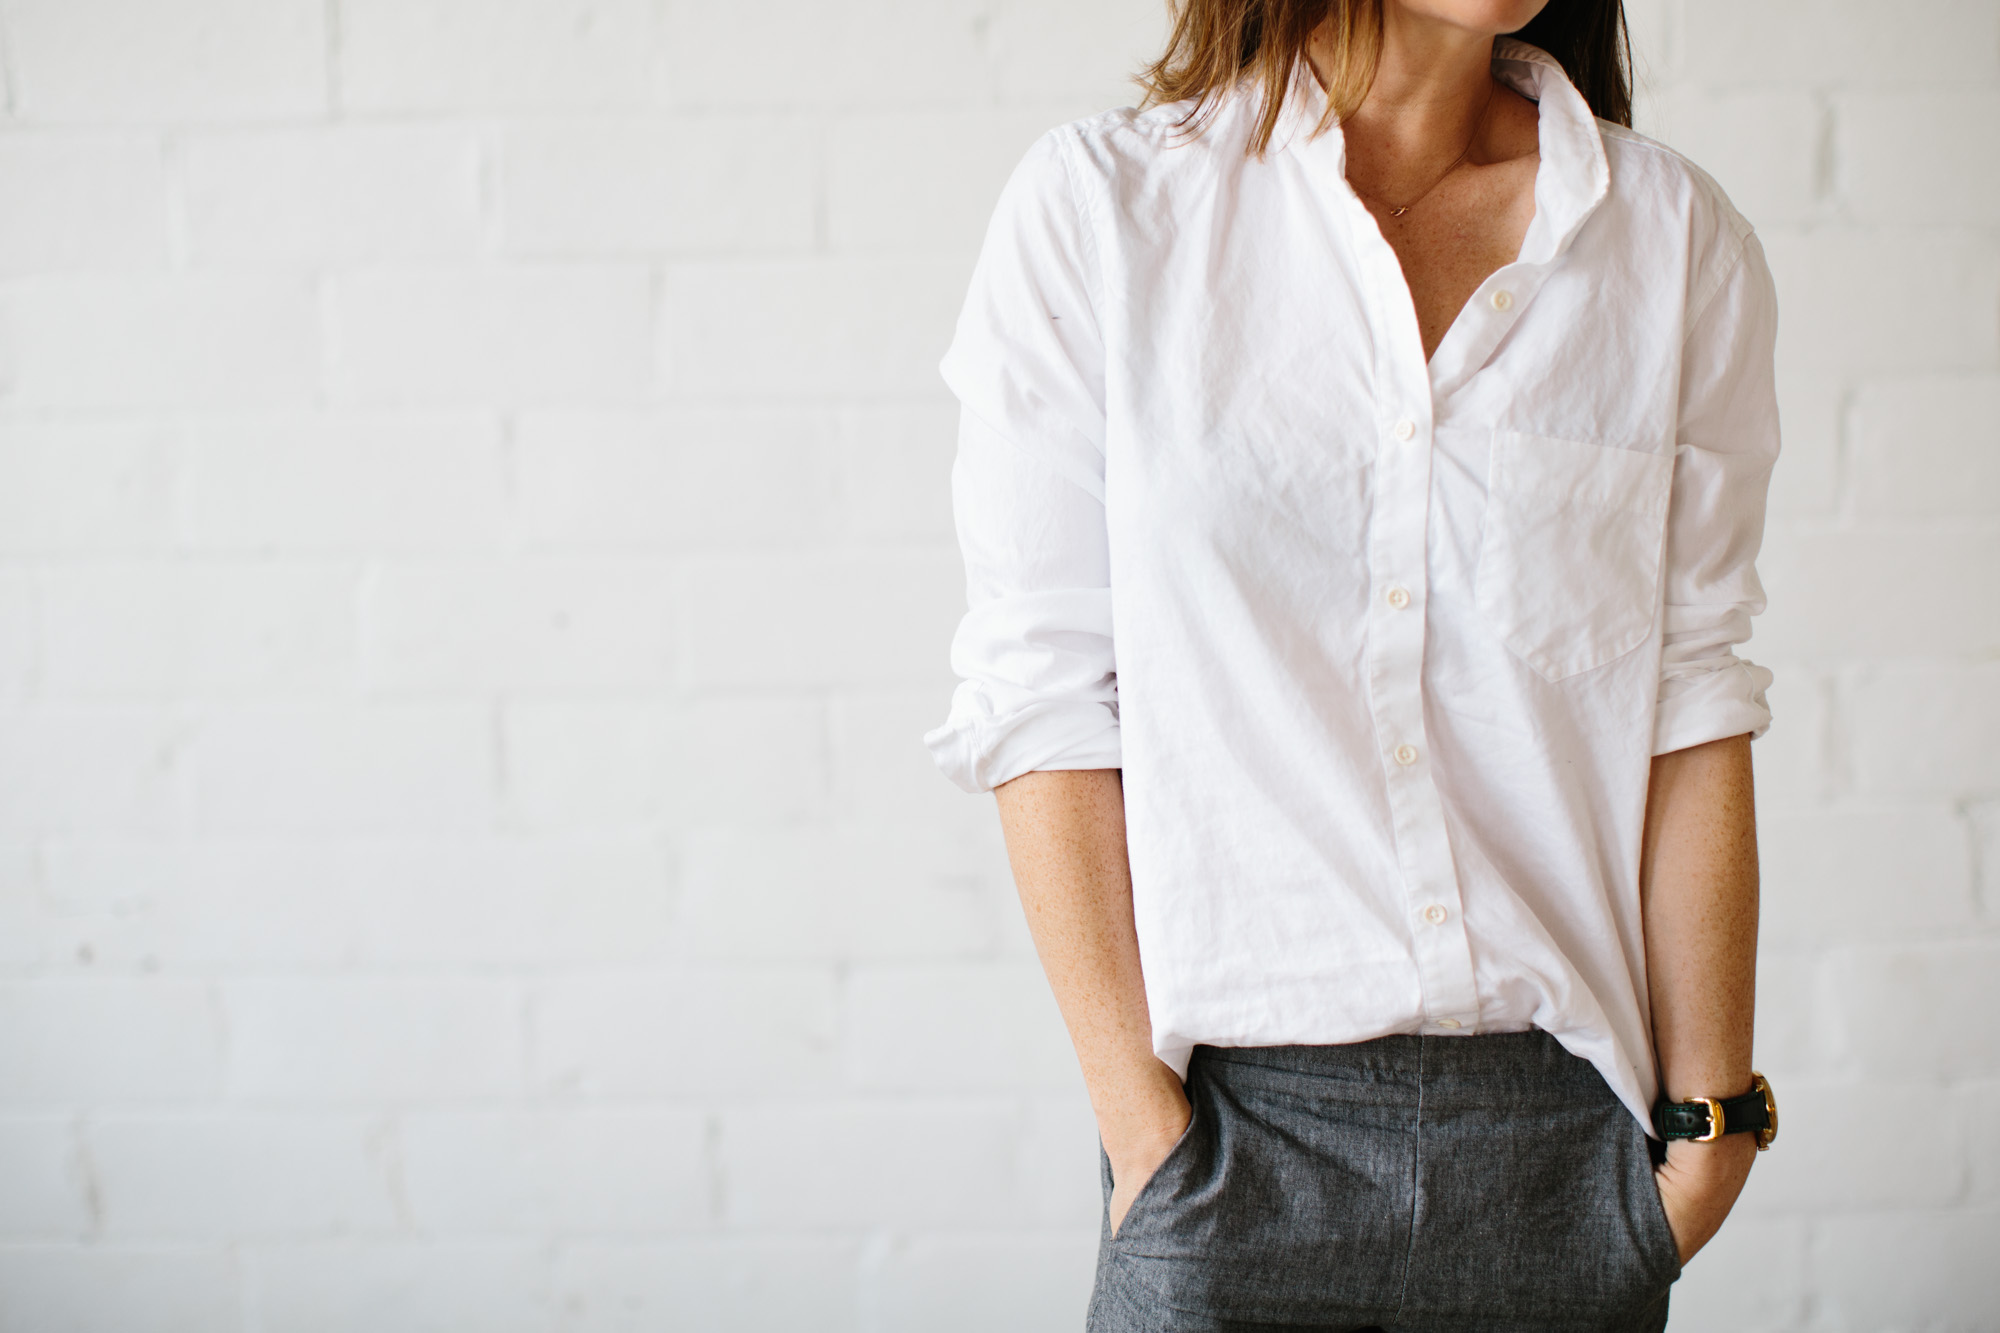 Why Women Should Buy Clothes From The Men's Section – La Blog Beauté